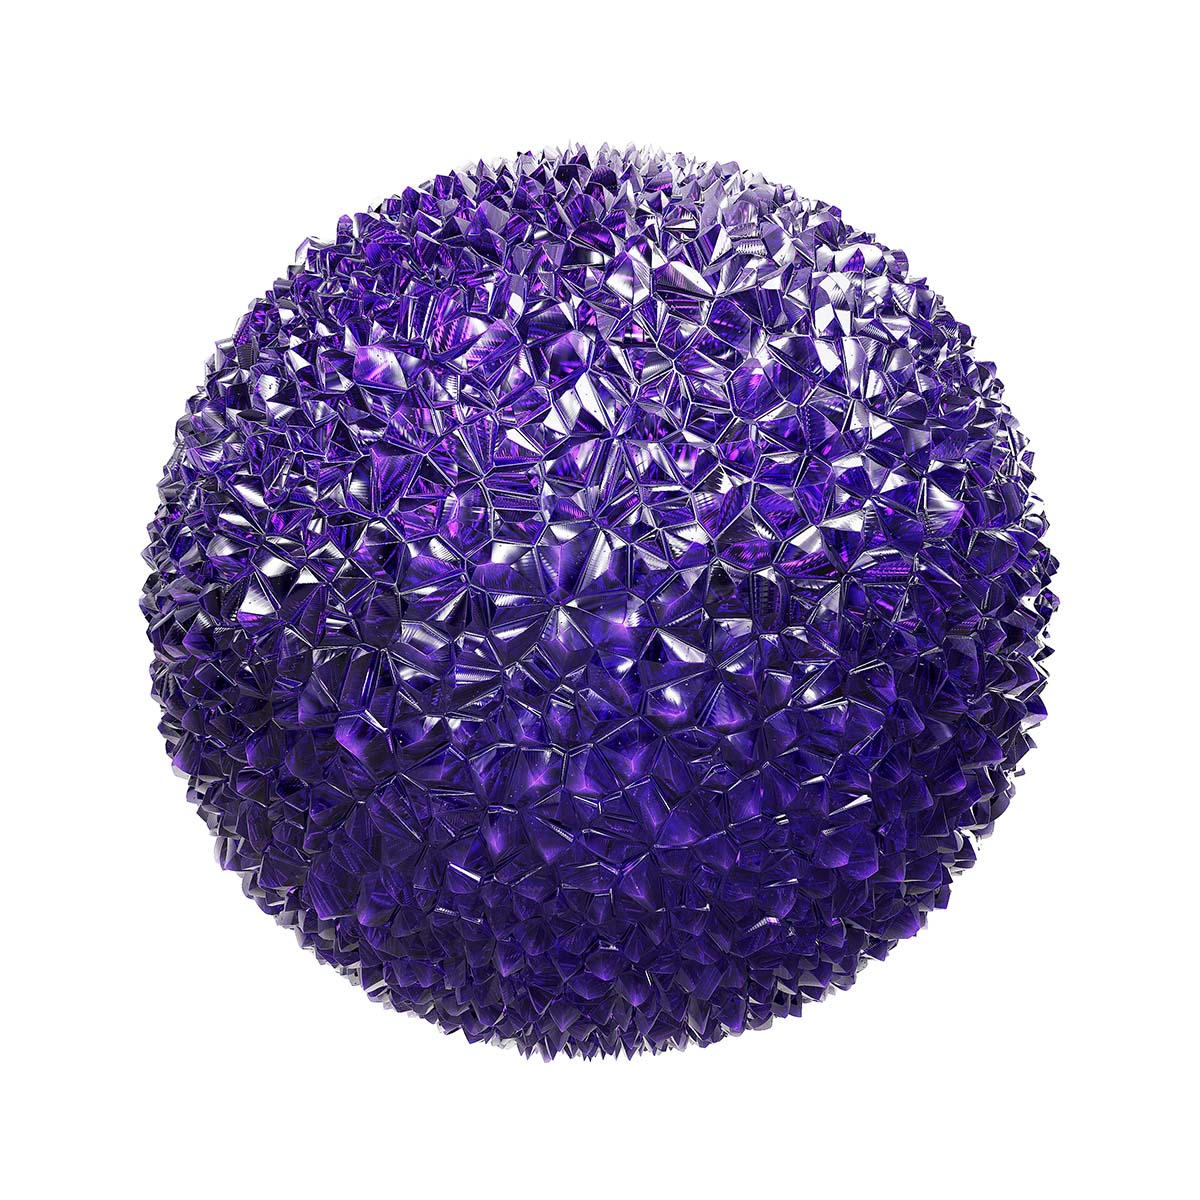 Violet Small Crystals PBR Texture